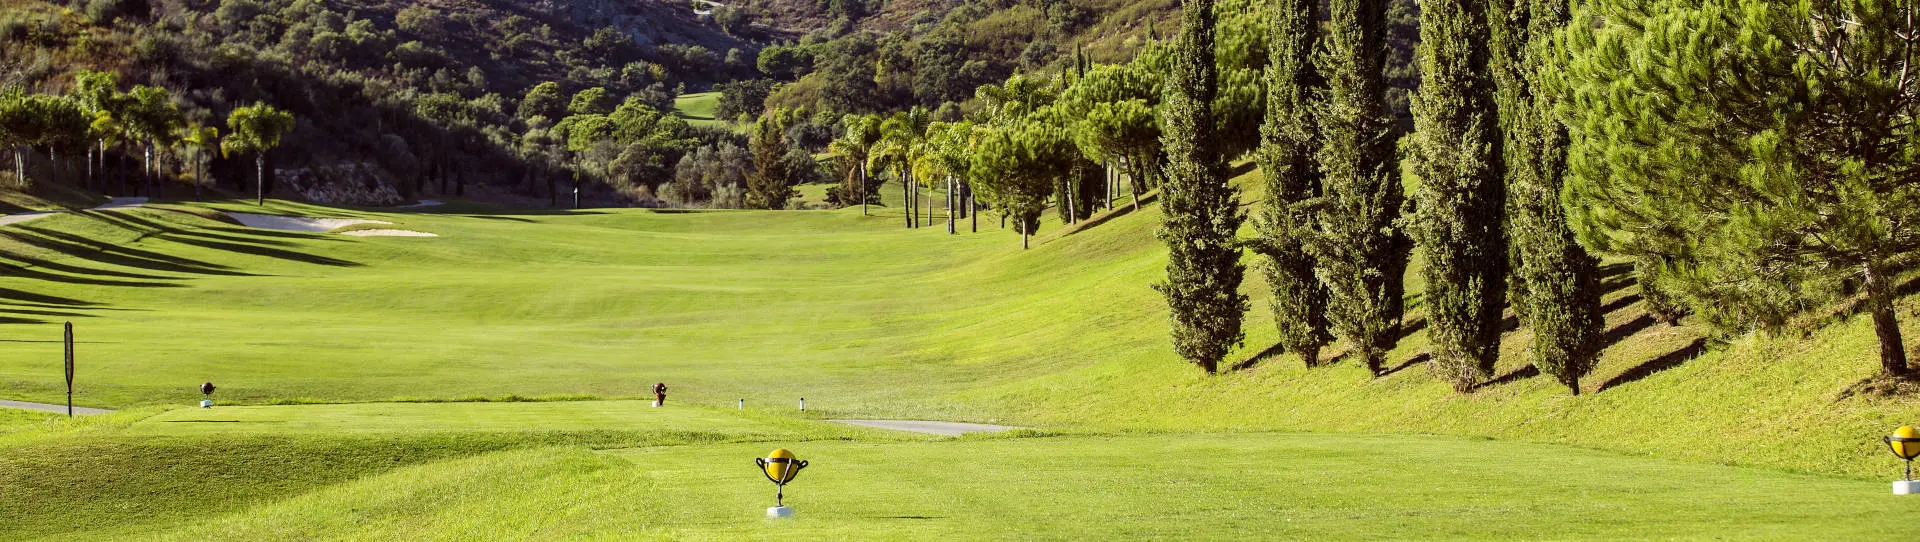 Spain golf courses - Alferini Golf at Villa Padierna - Photo 3